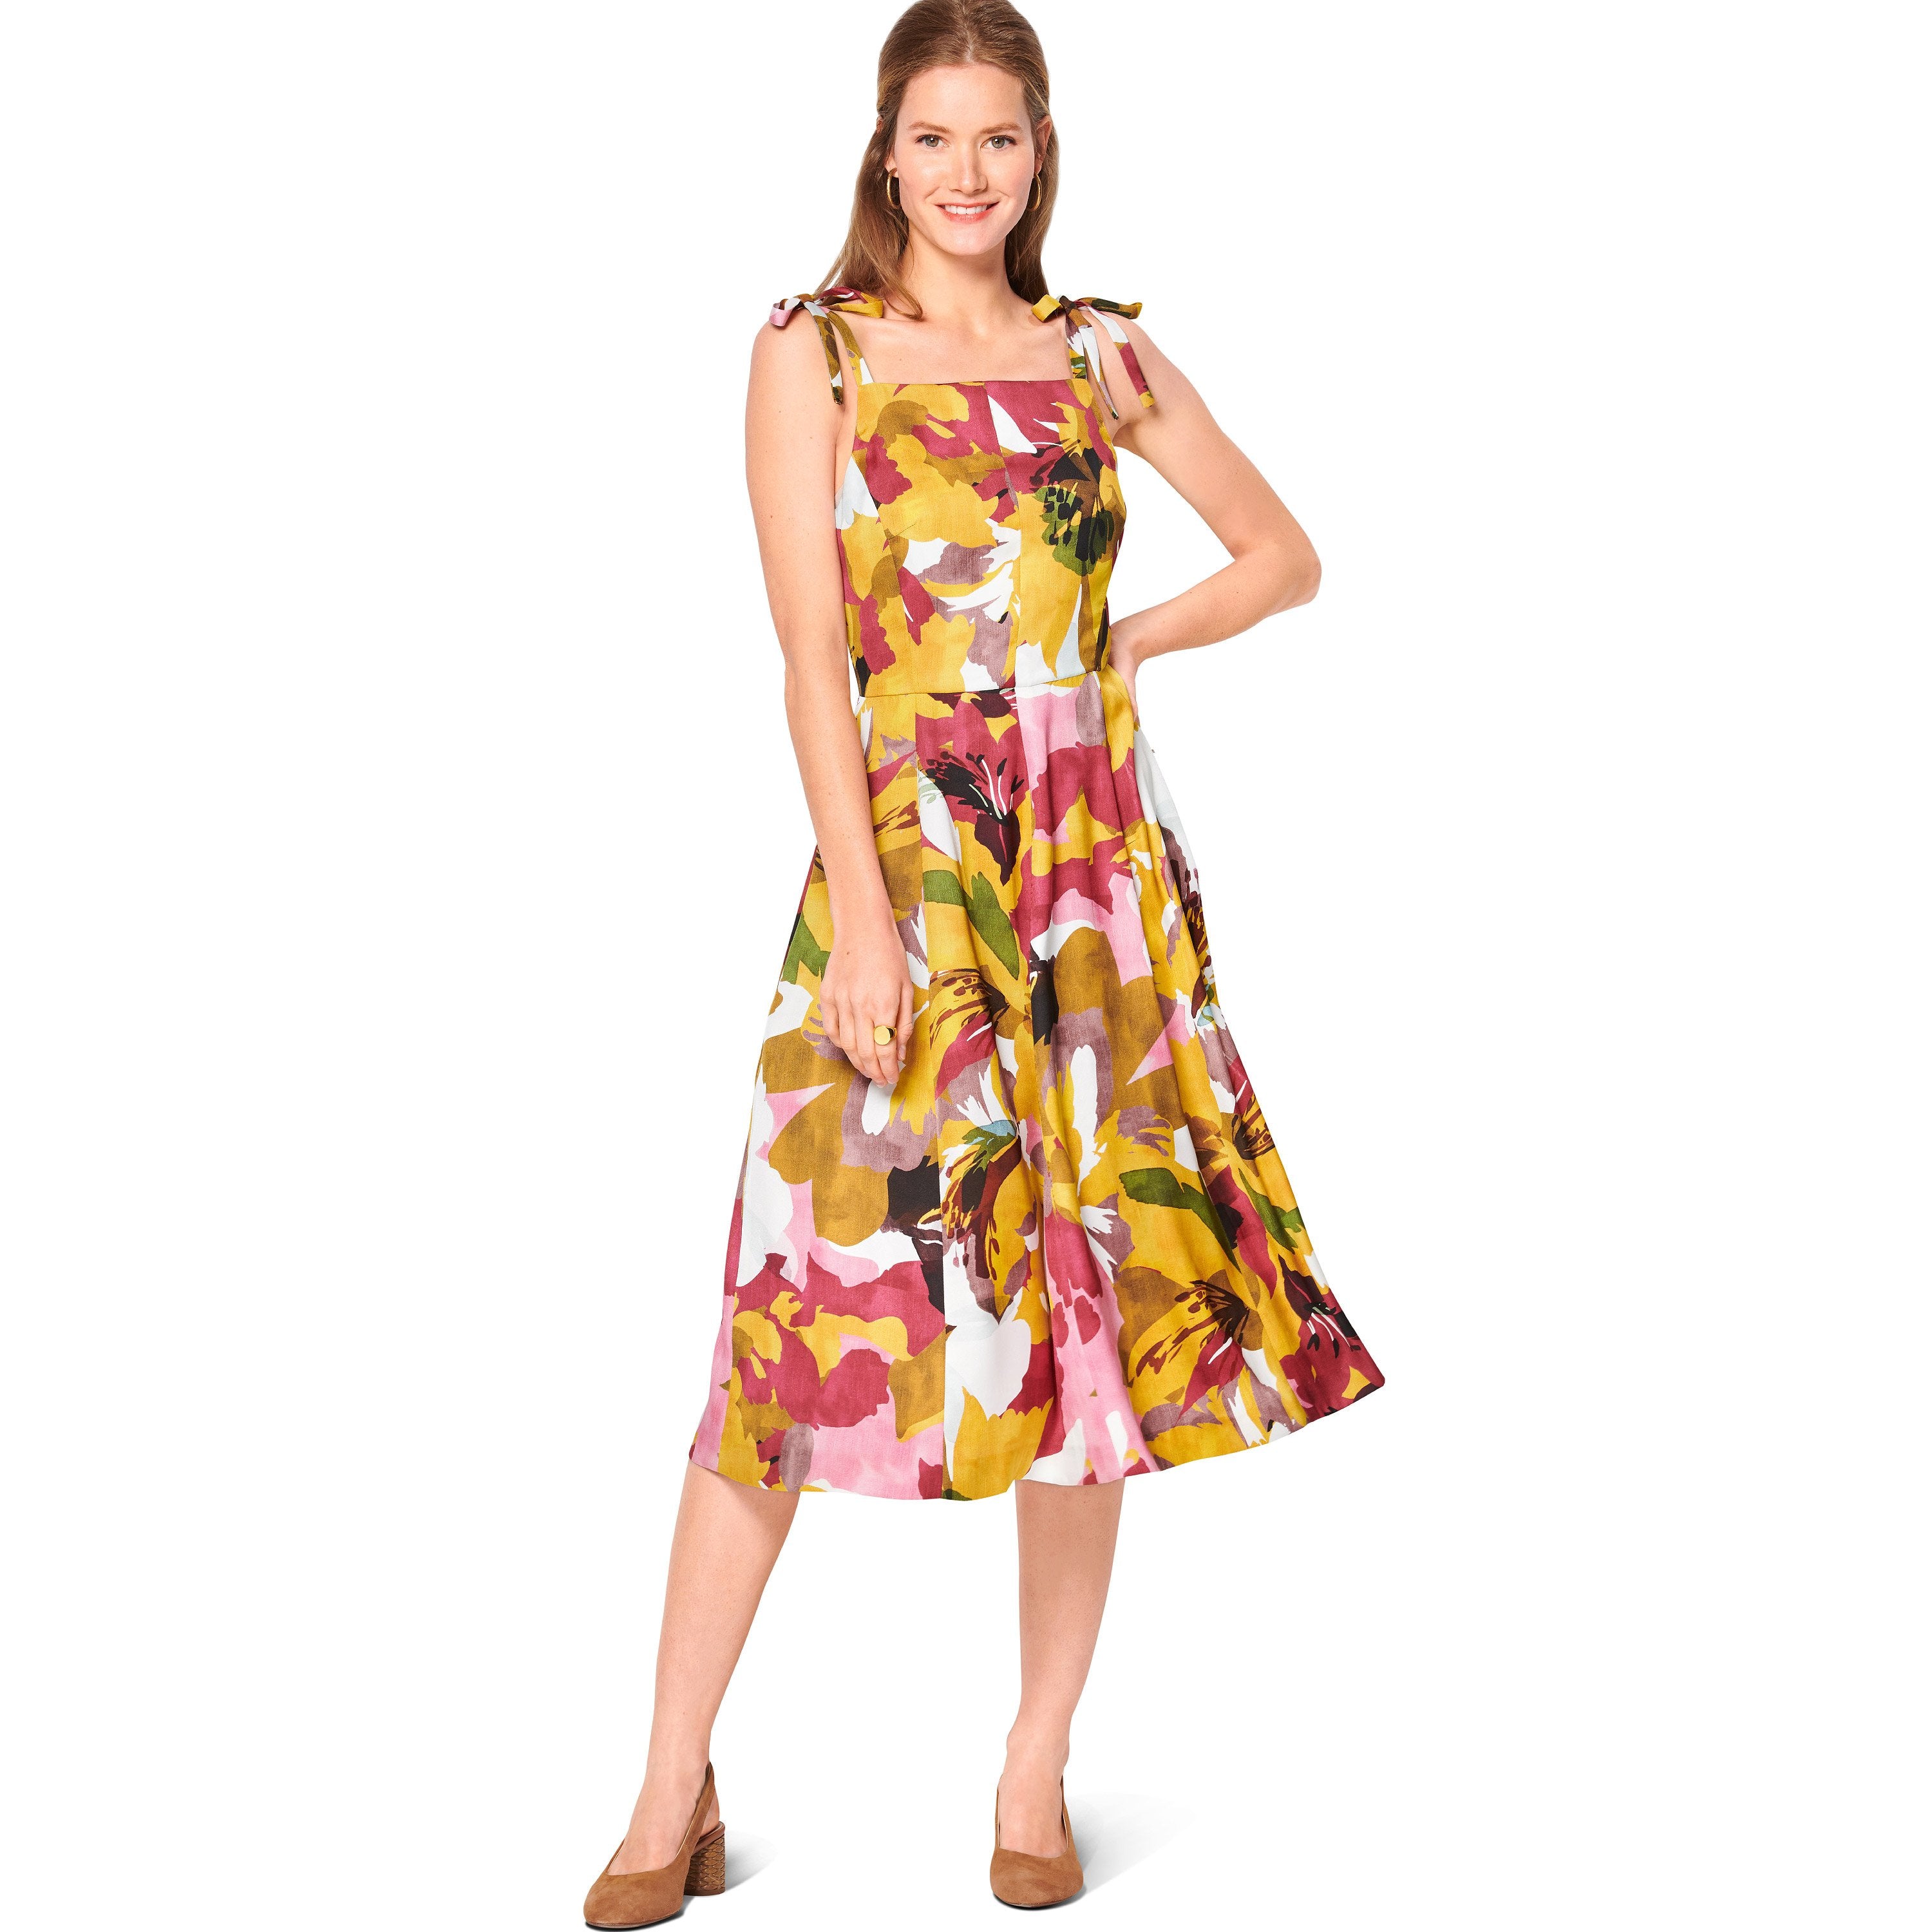 Burda Sewing Pattern 6140 Dress from Jaycotts Sewing Supplies